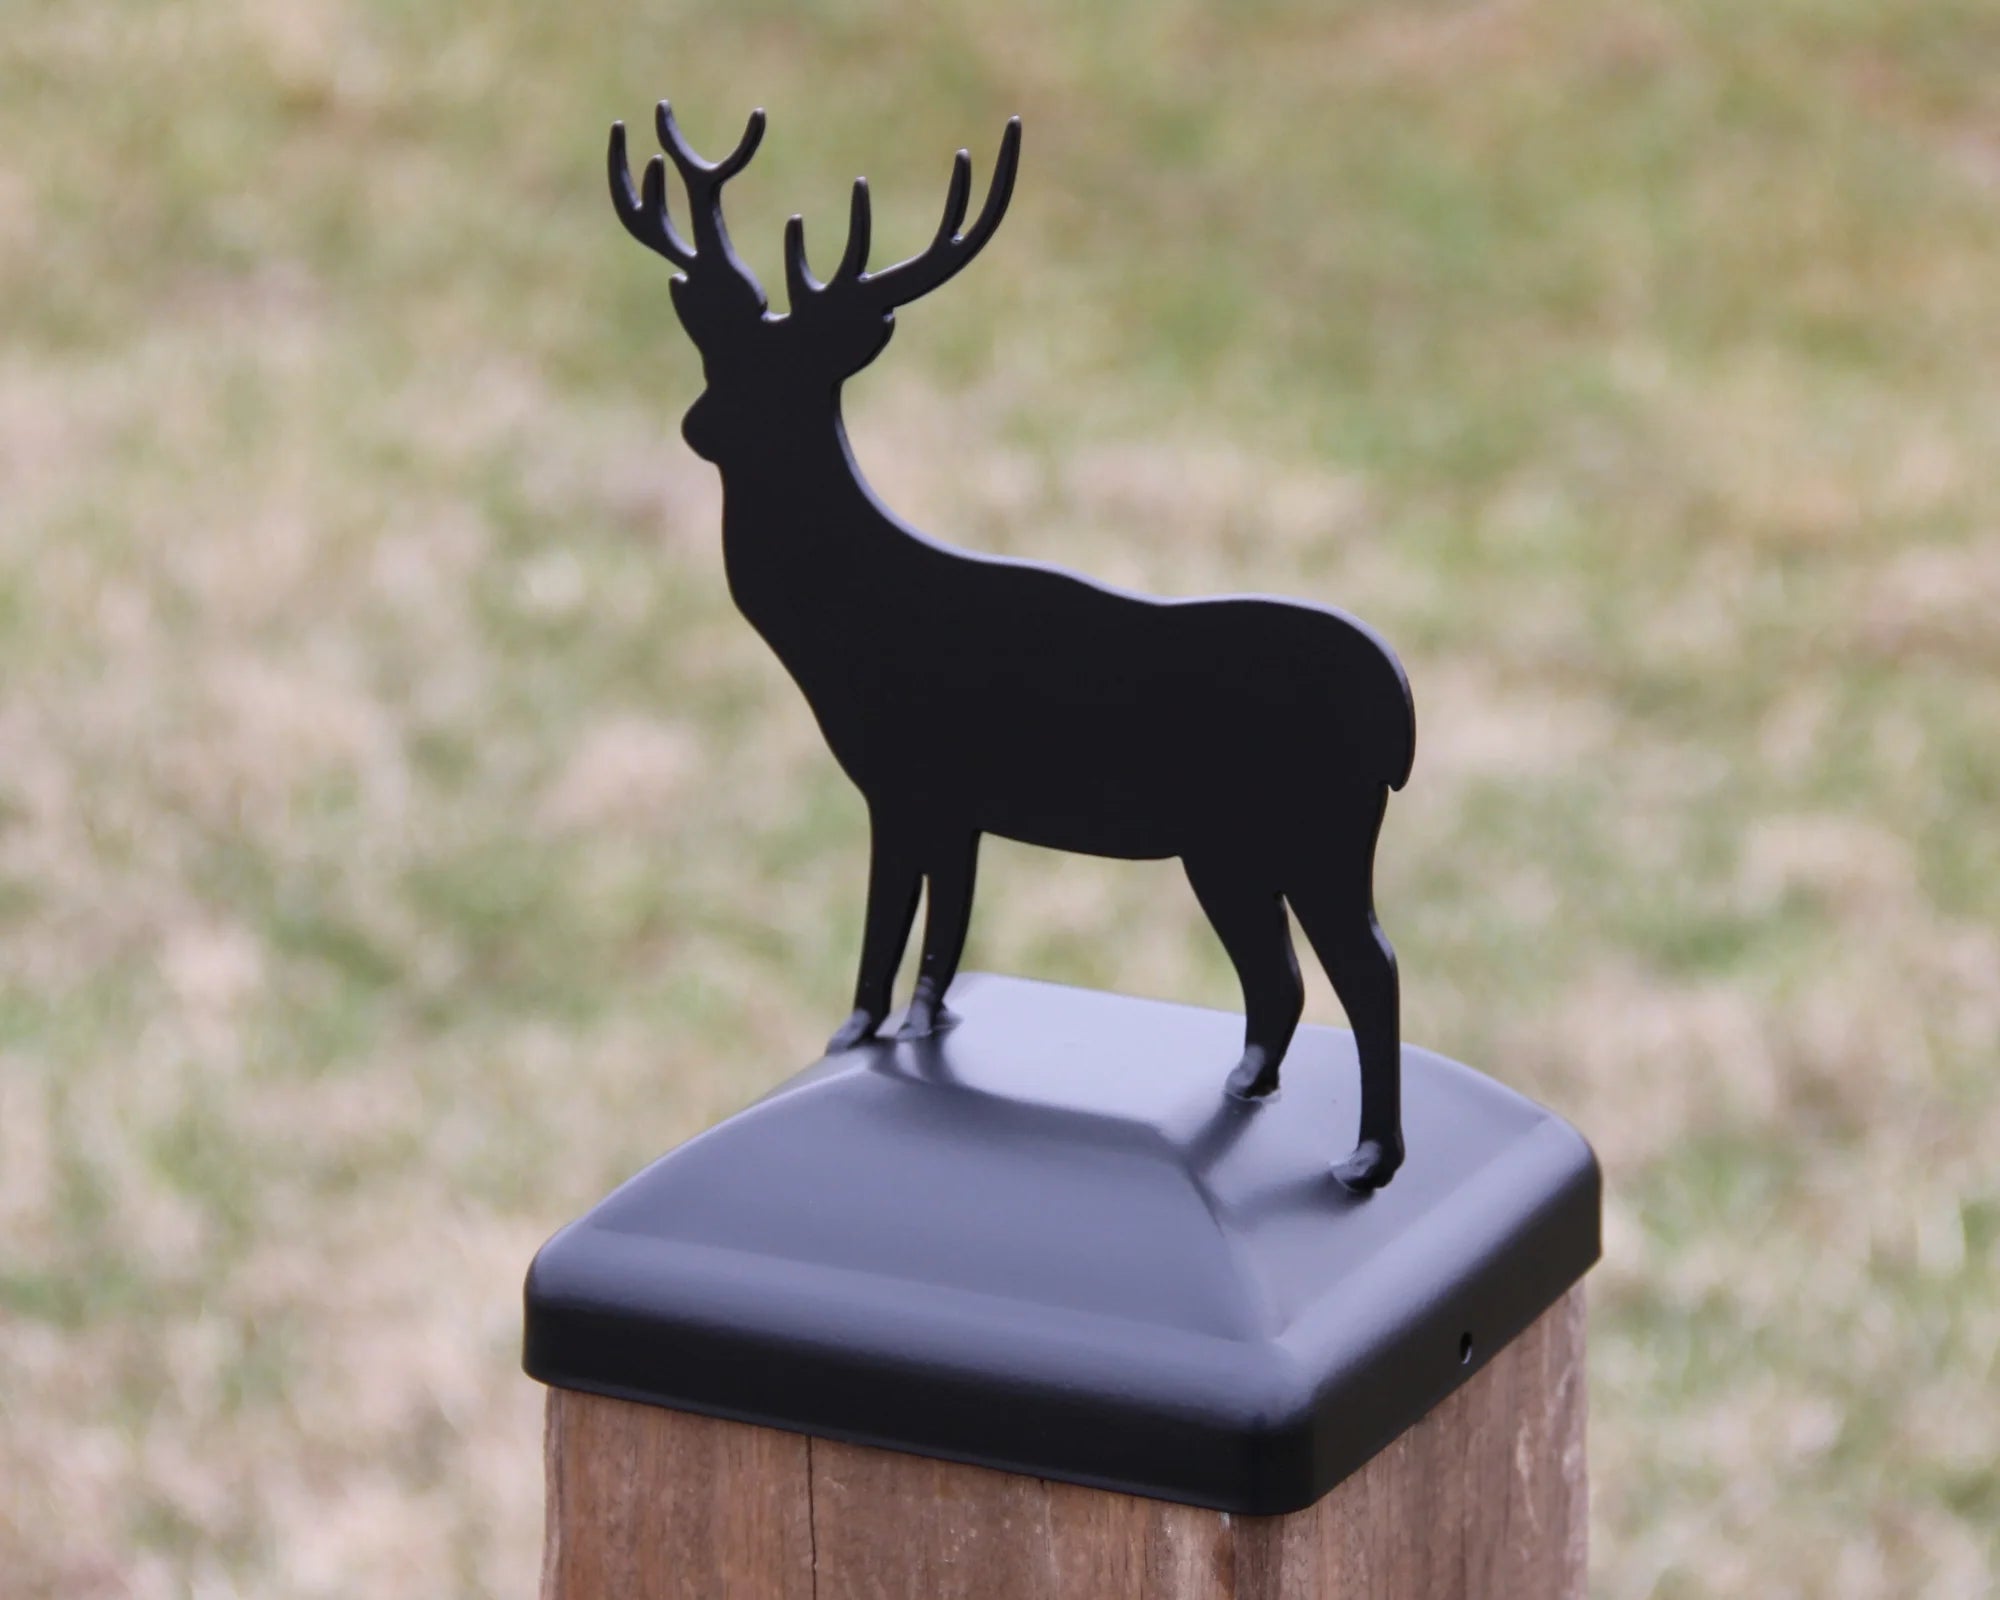 6X6 Deer Post Cap (5.5 x 5.5 Post Size)